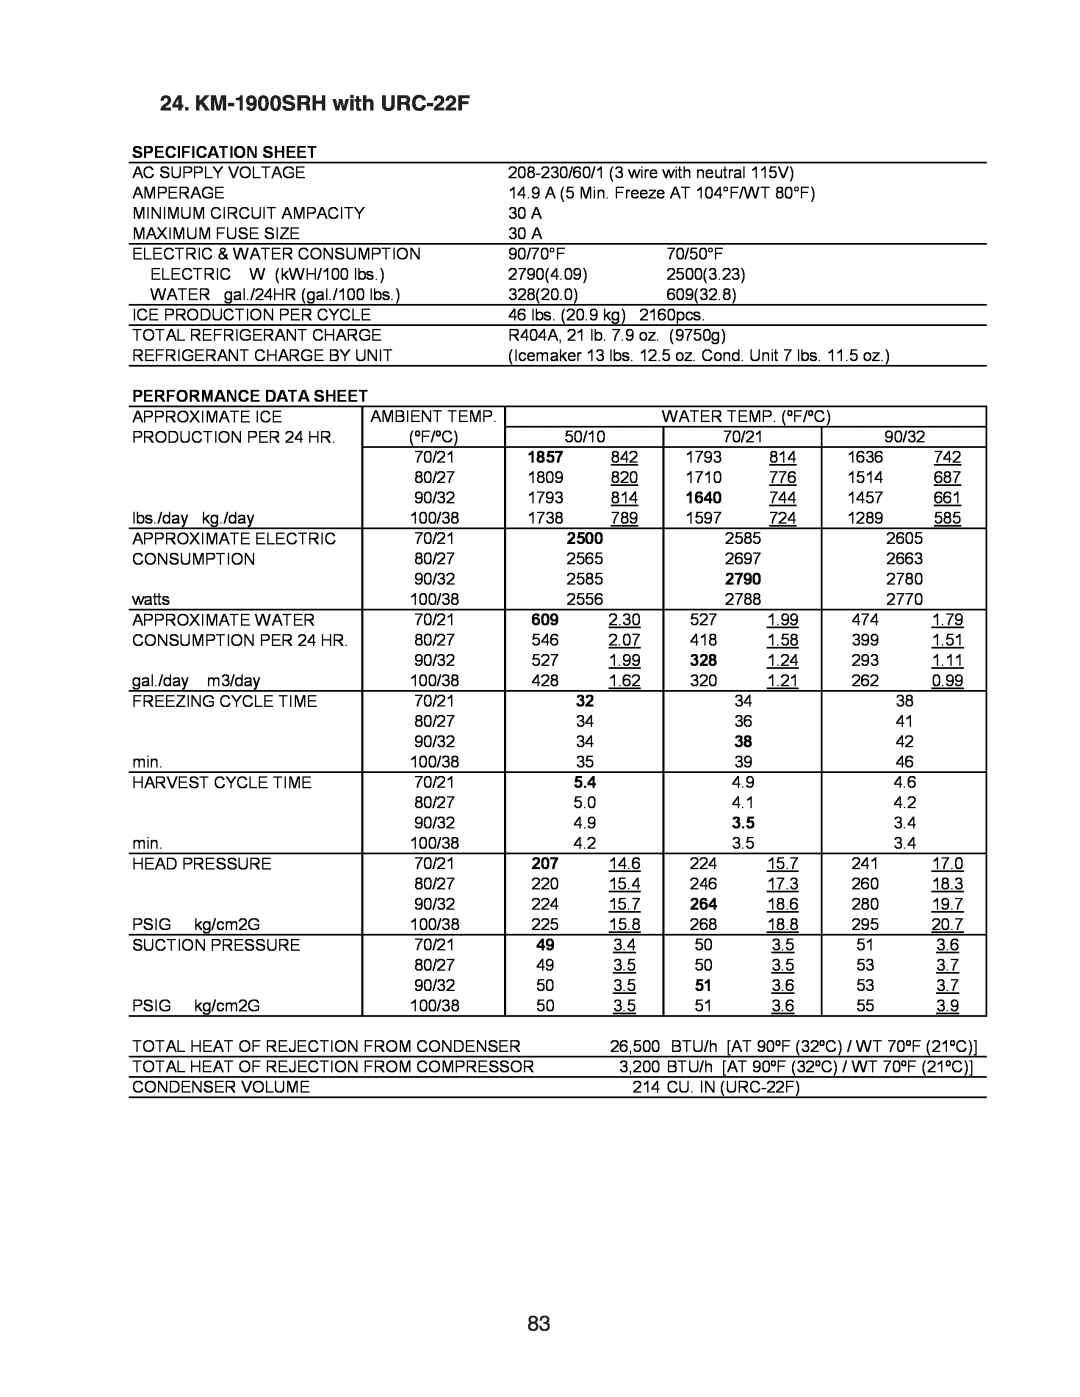 Hoshizaki SRH/3 KM-1400SWH-M, SWH/3 KM-1900SRH with URC-22F, Specification Sheet, Performance Data Sheet, 1857, 2500 